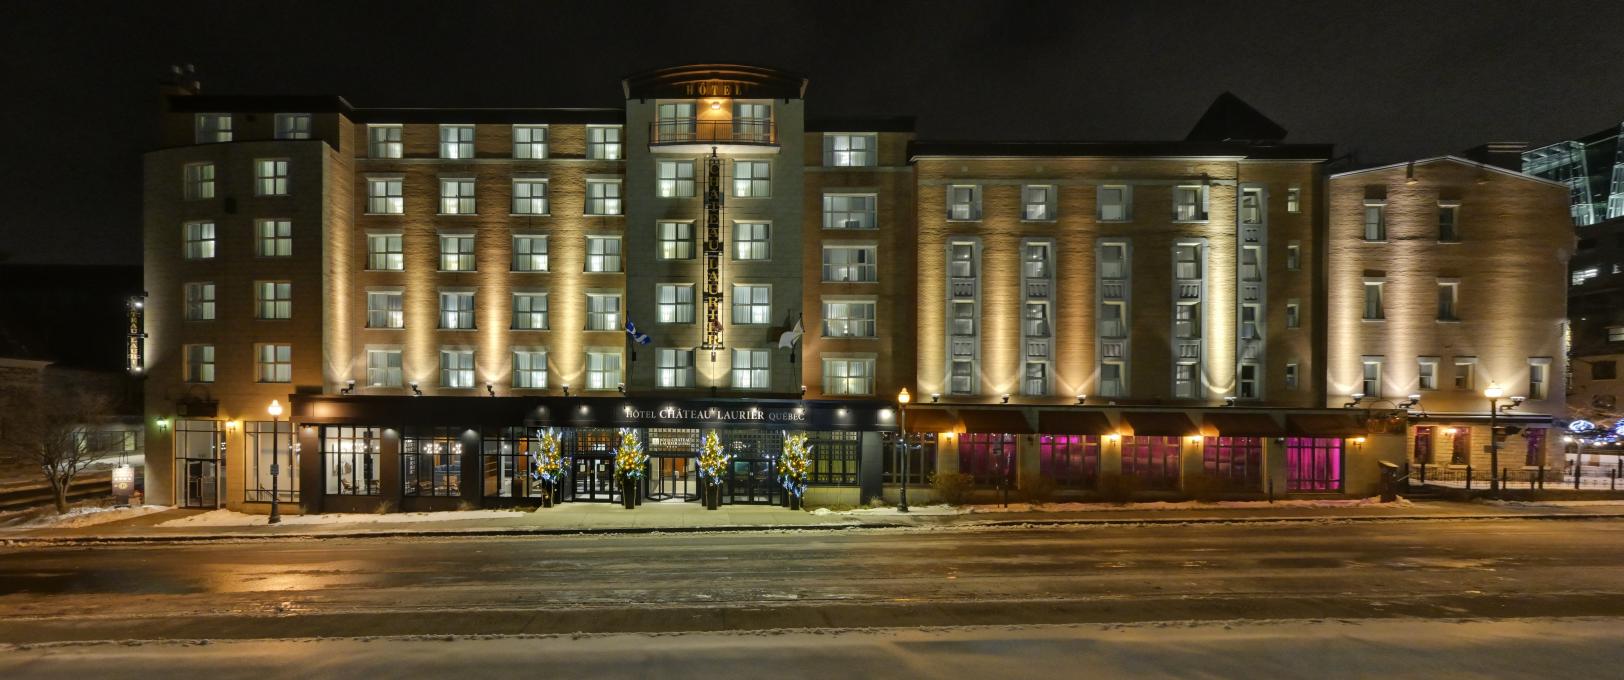 Hôtel Château Laurier Québec - exterior facade in winter